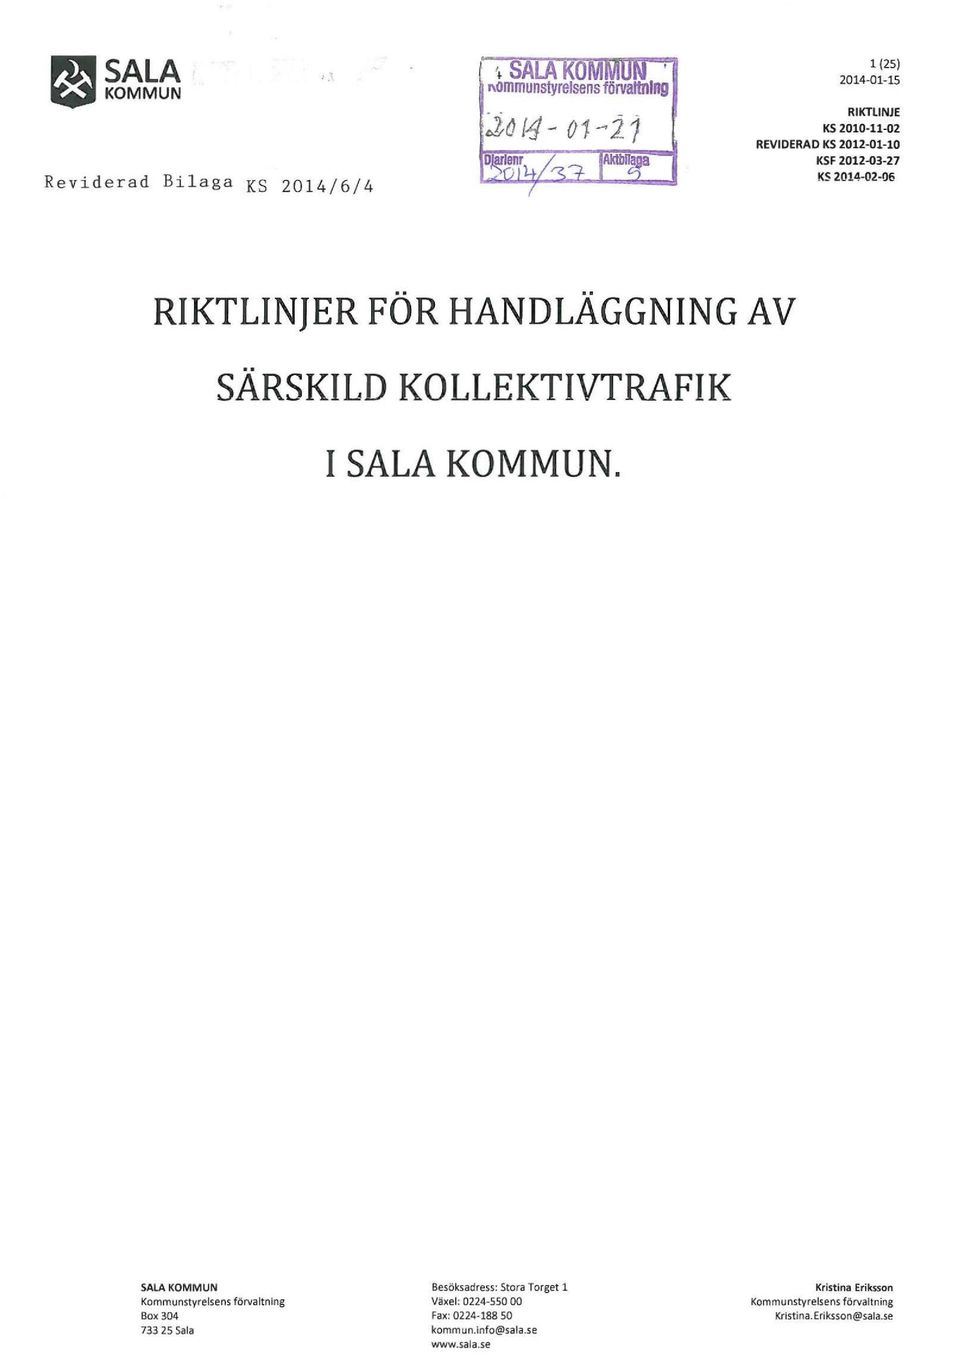 2014-02-06 RIKTLINJER FOR HANDLAGGNING AV SARSKILD KOLLEKTIVTRAFIK I SALA KOMMUN.